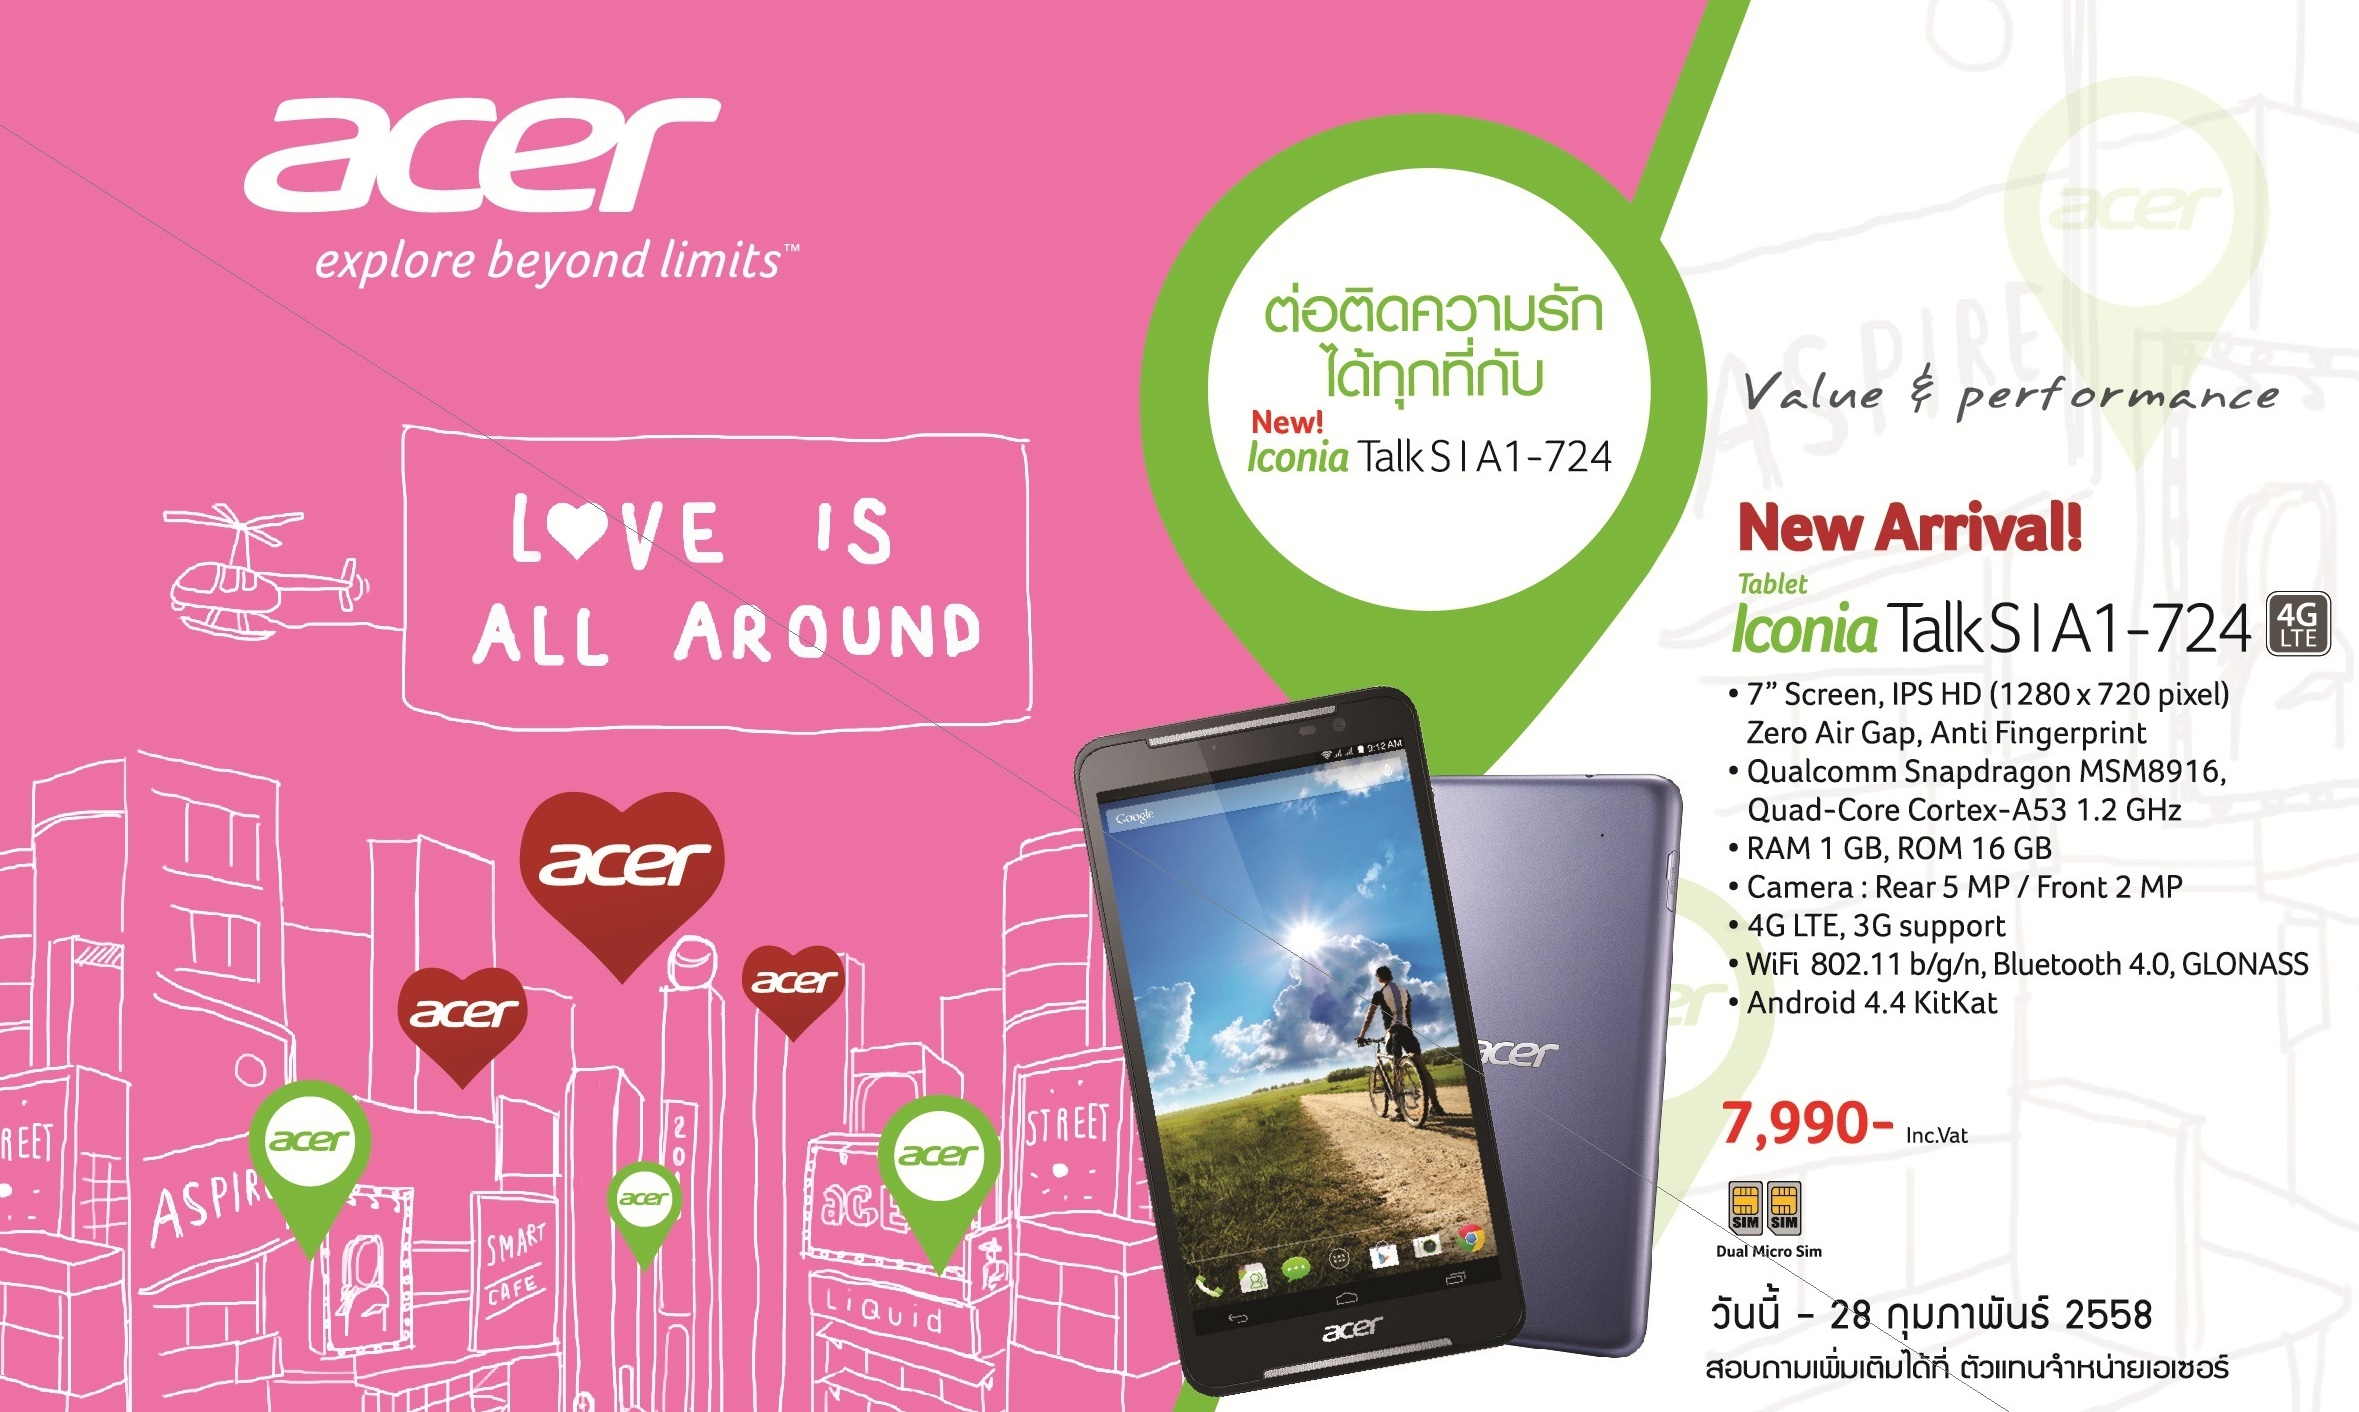 Acer Promotion Feb 2015 001